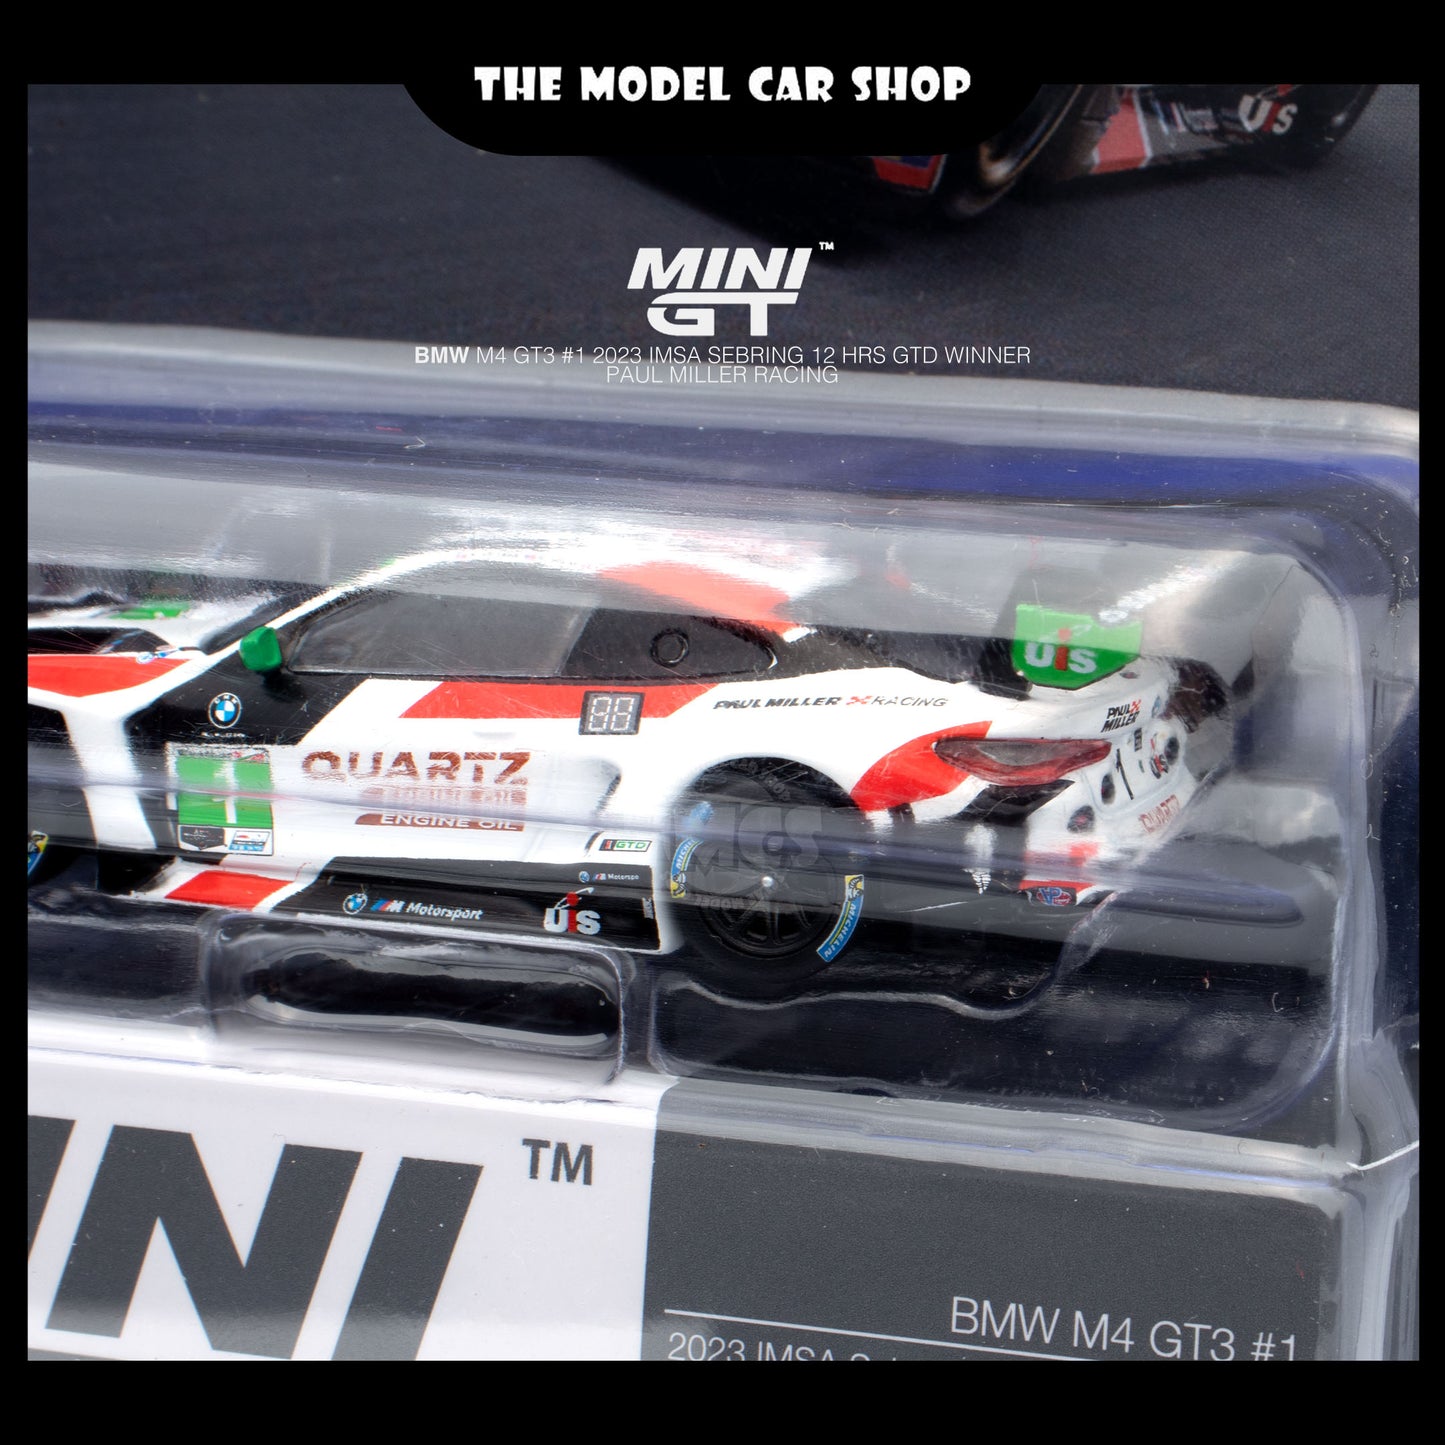 [MINI GT] BMW M4 GT3 #1 Paul Miller Racing IMSA 2023 Sebring 12 Hrs. GTD Winner (Mijo Exclusive)